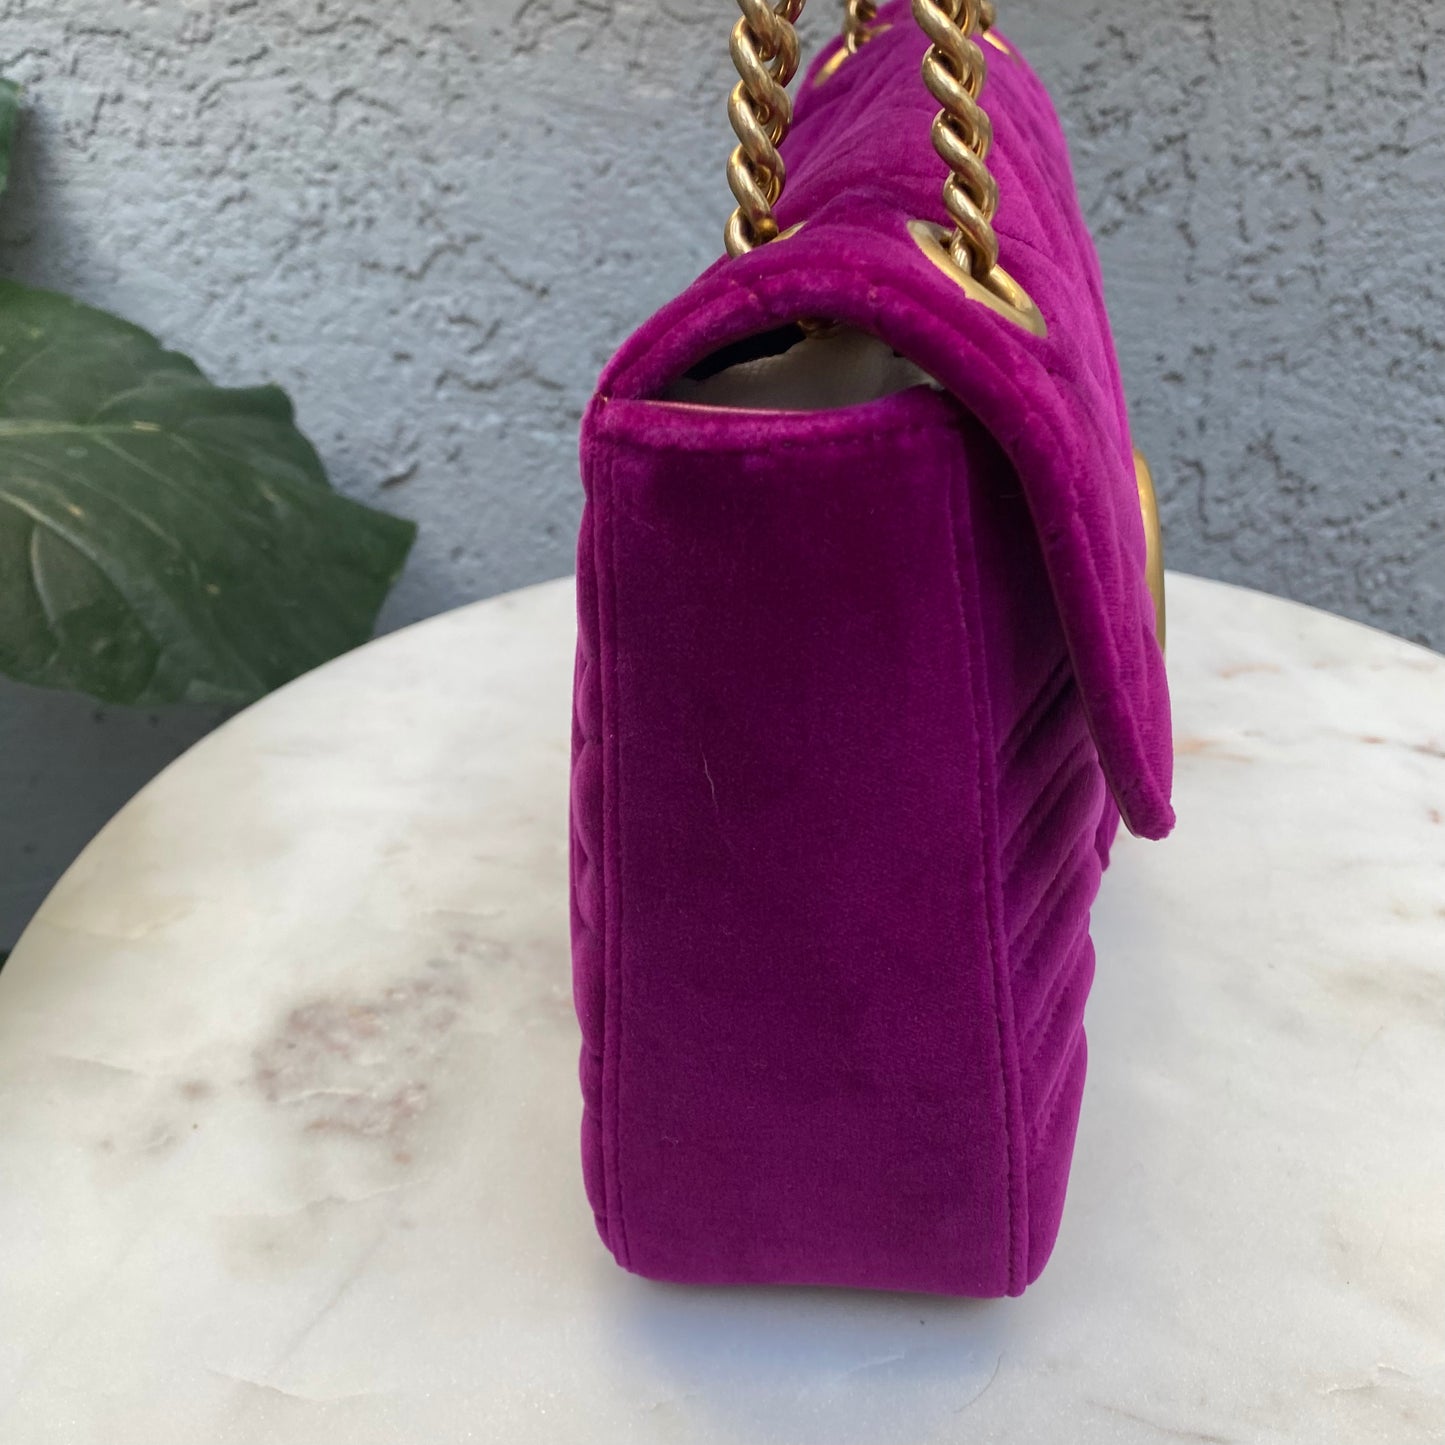 Gucci Velvet Matelasse Medium GG Marmont Shoulder Bag